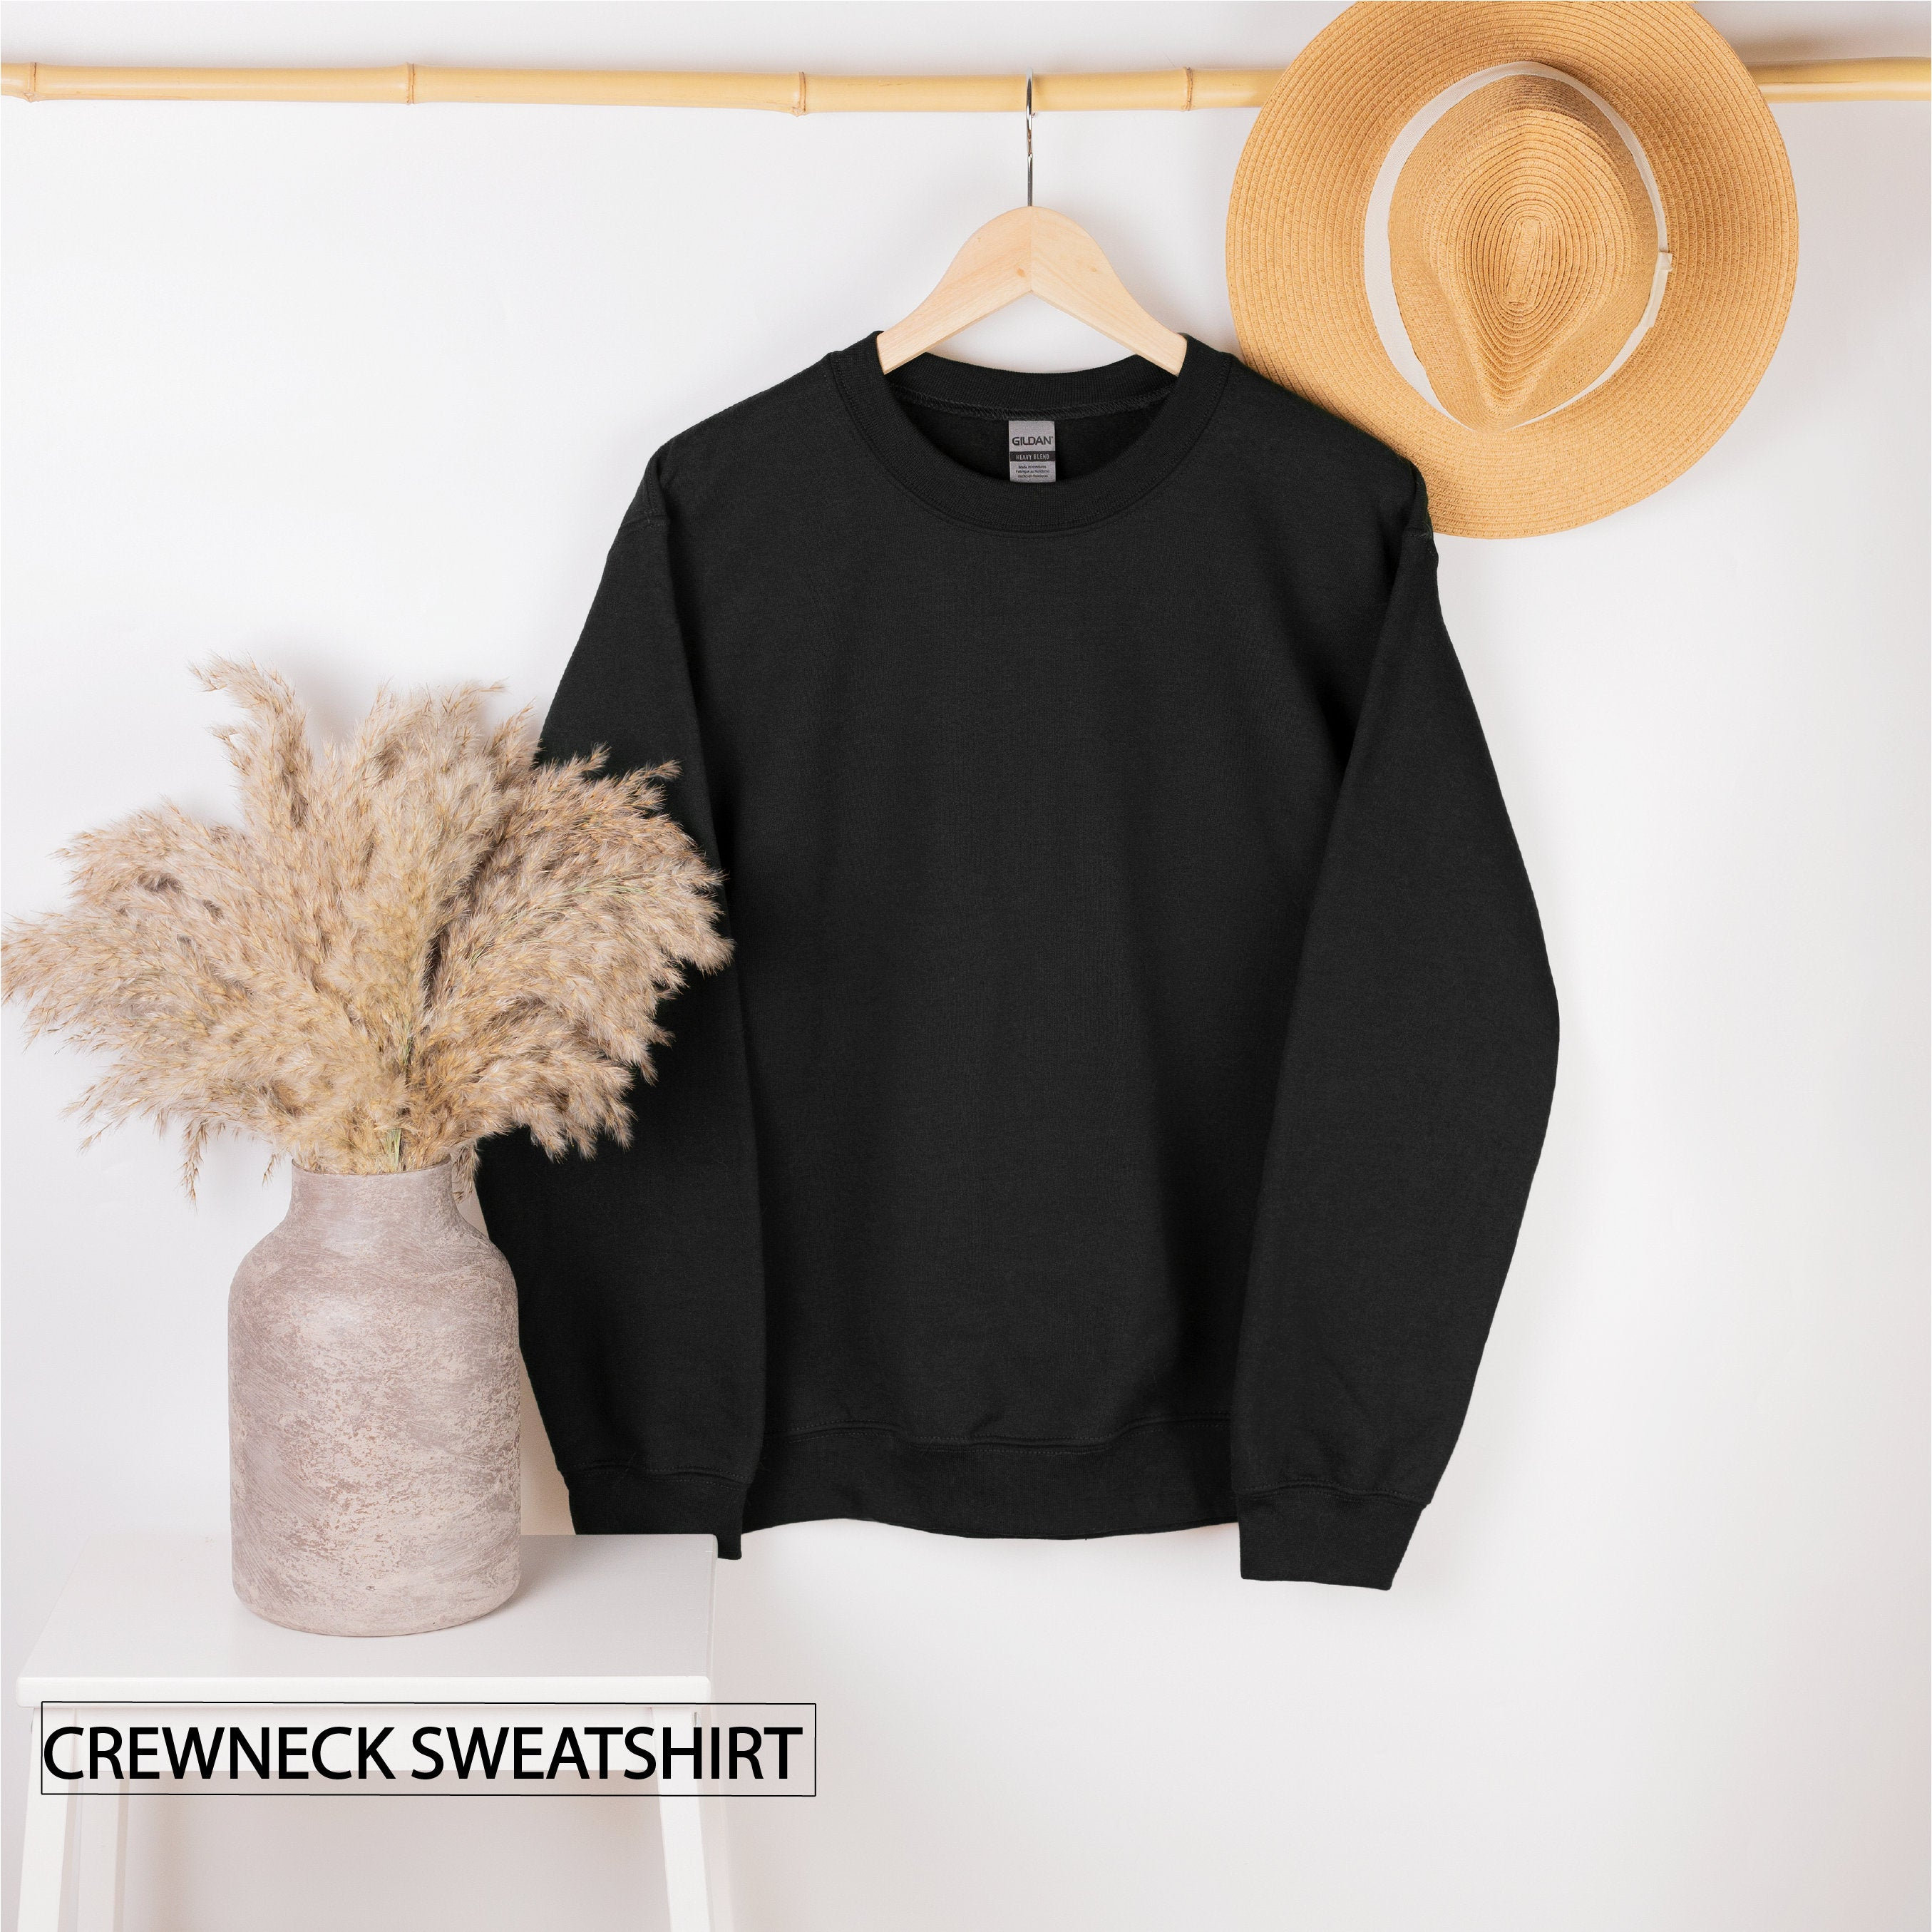 Wholesale Crewneck Sweatshirt Bulk Orders Personalized - Etsy